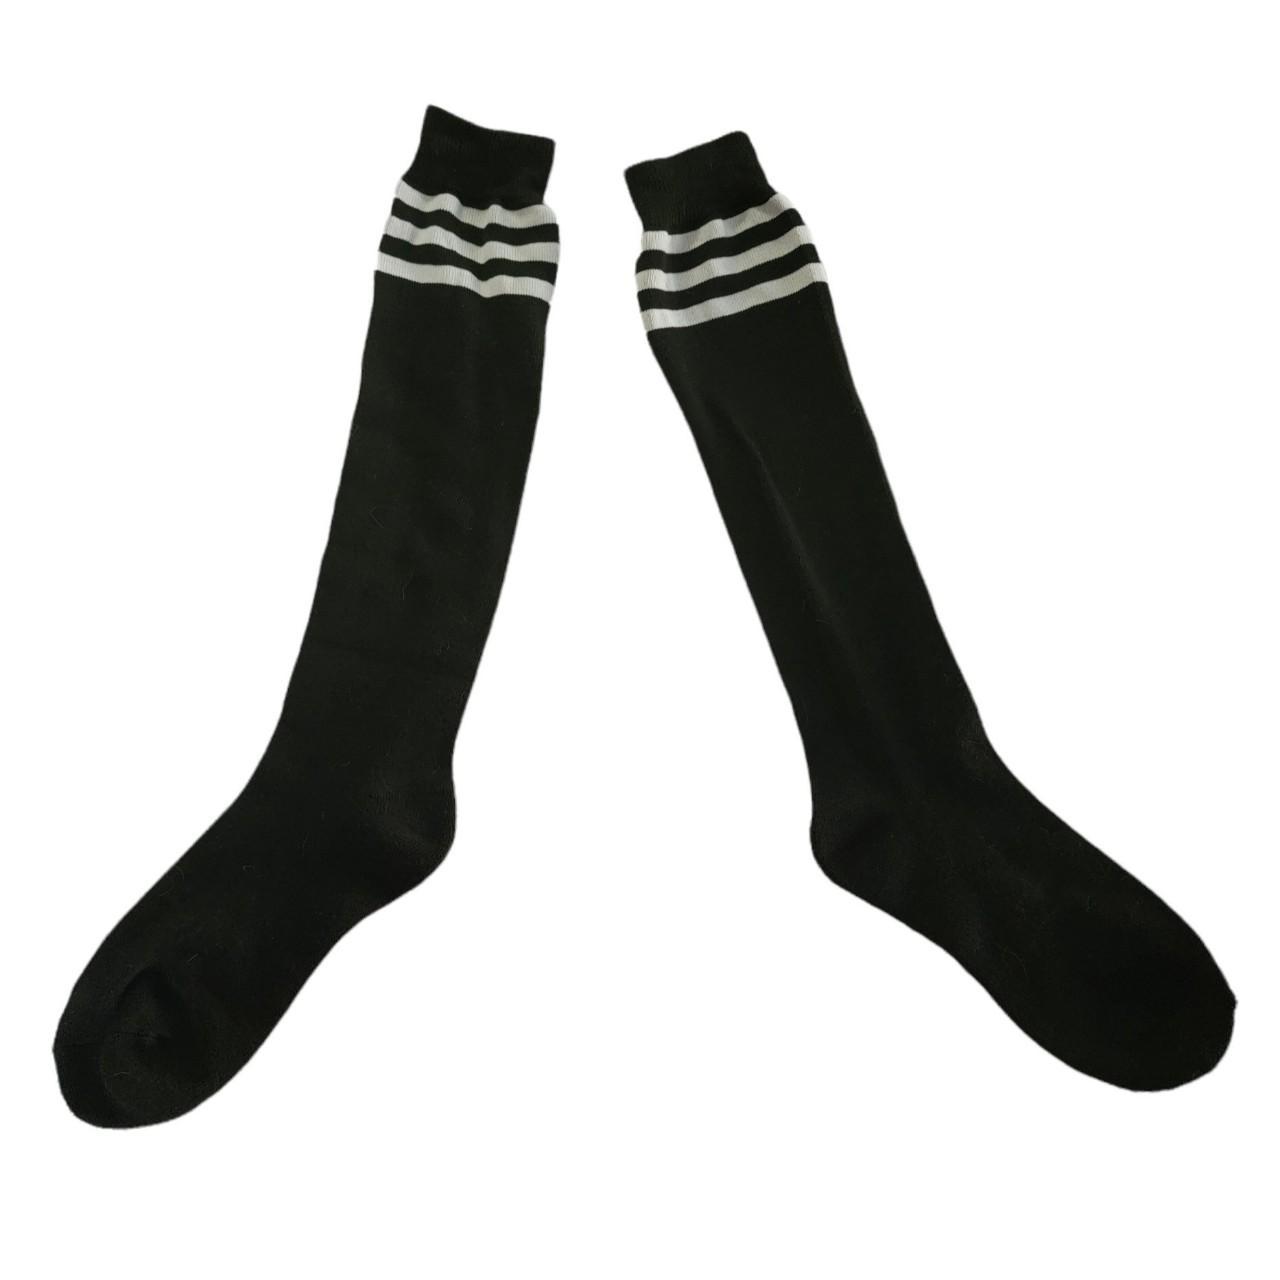 Hot Topic Women's Black and White Socks